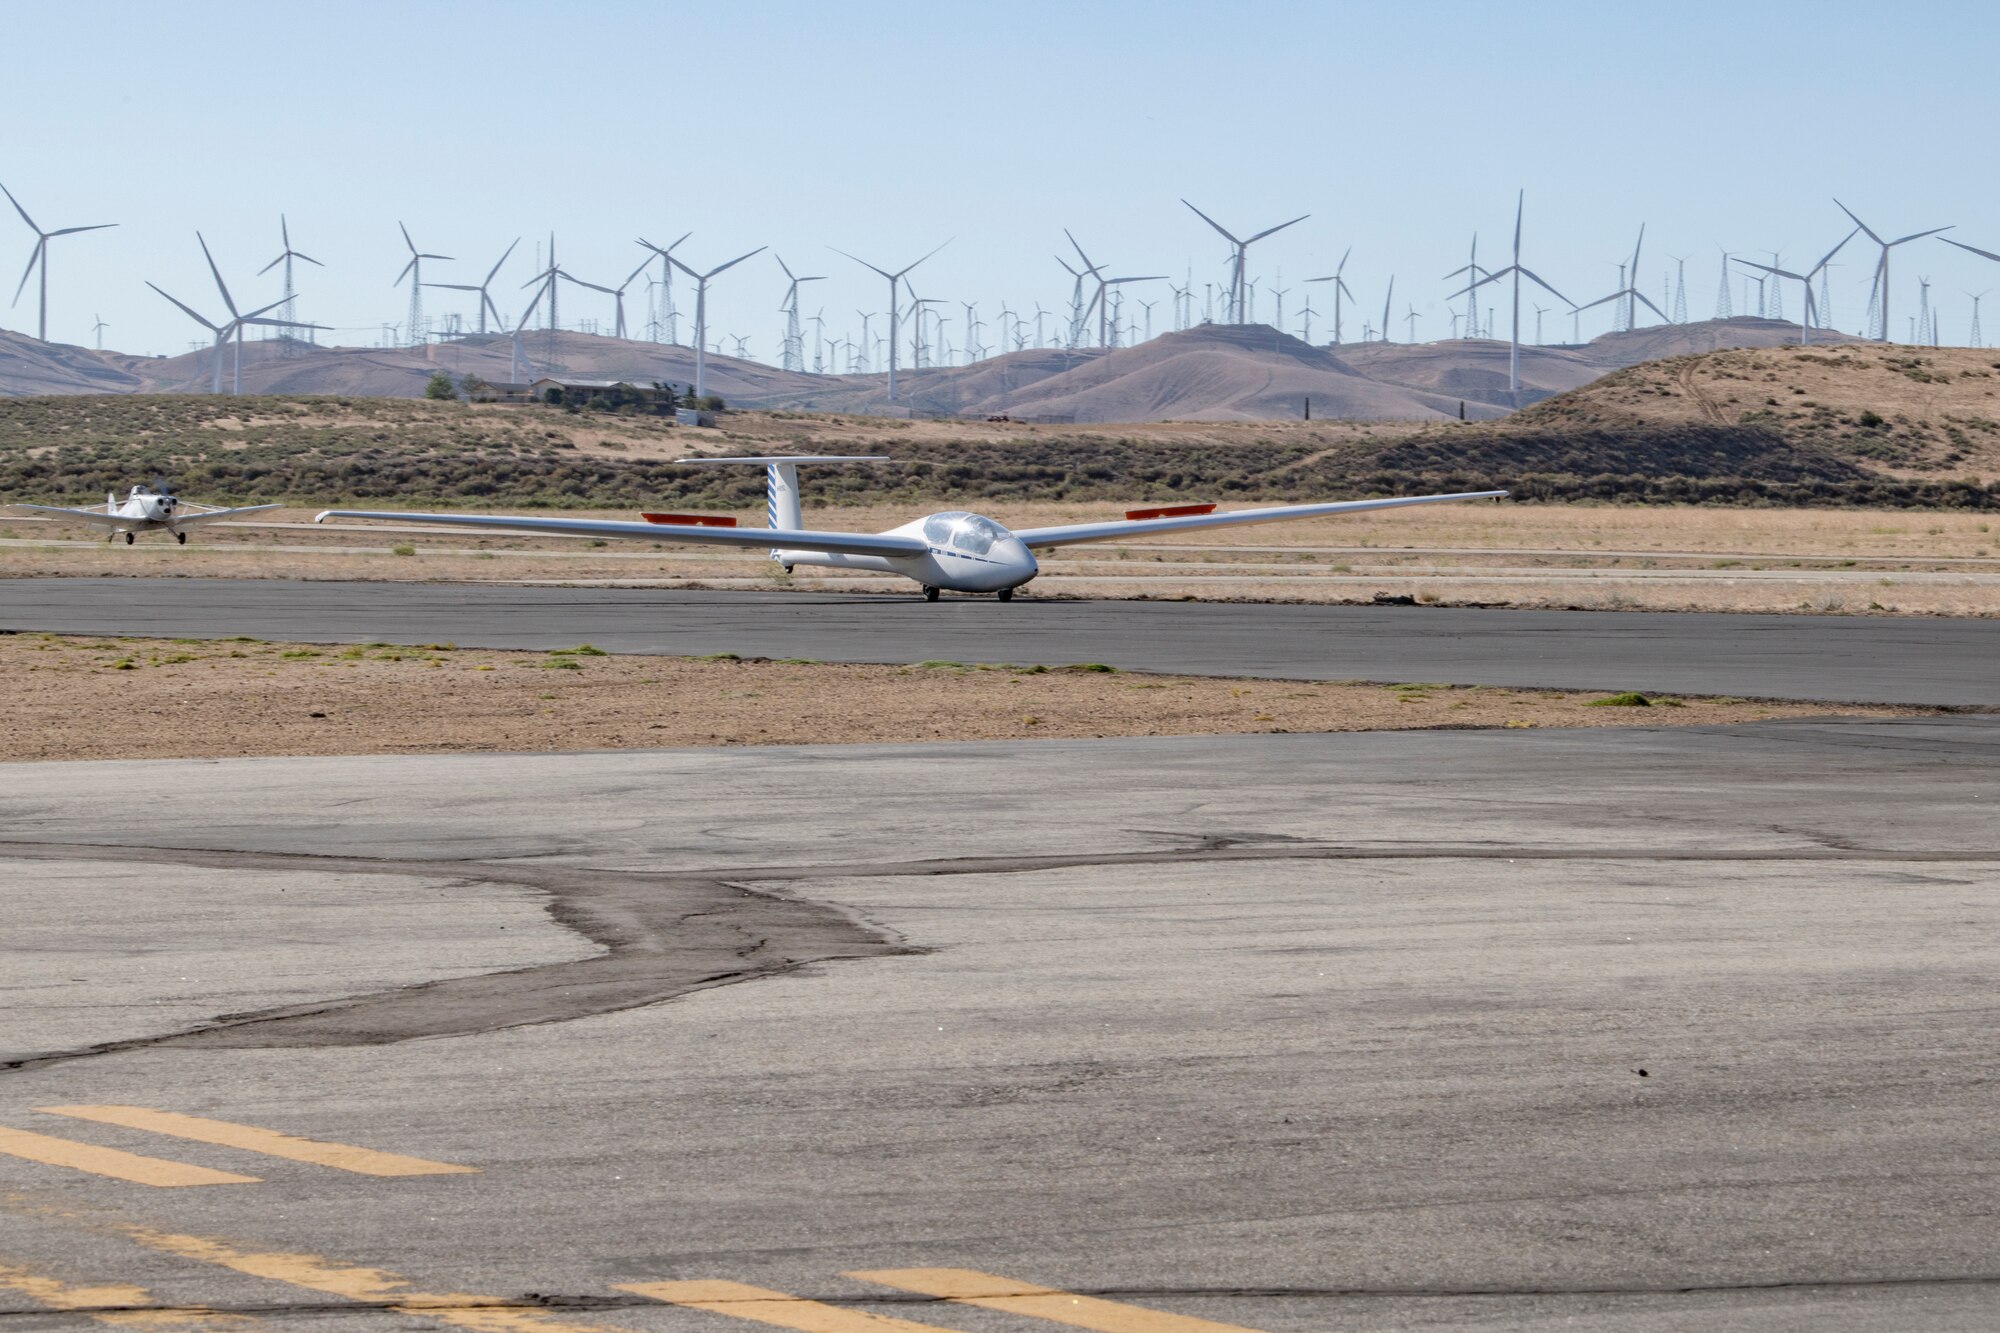 Glider landing at airport